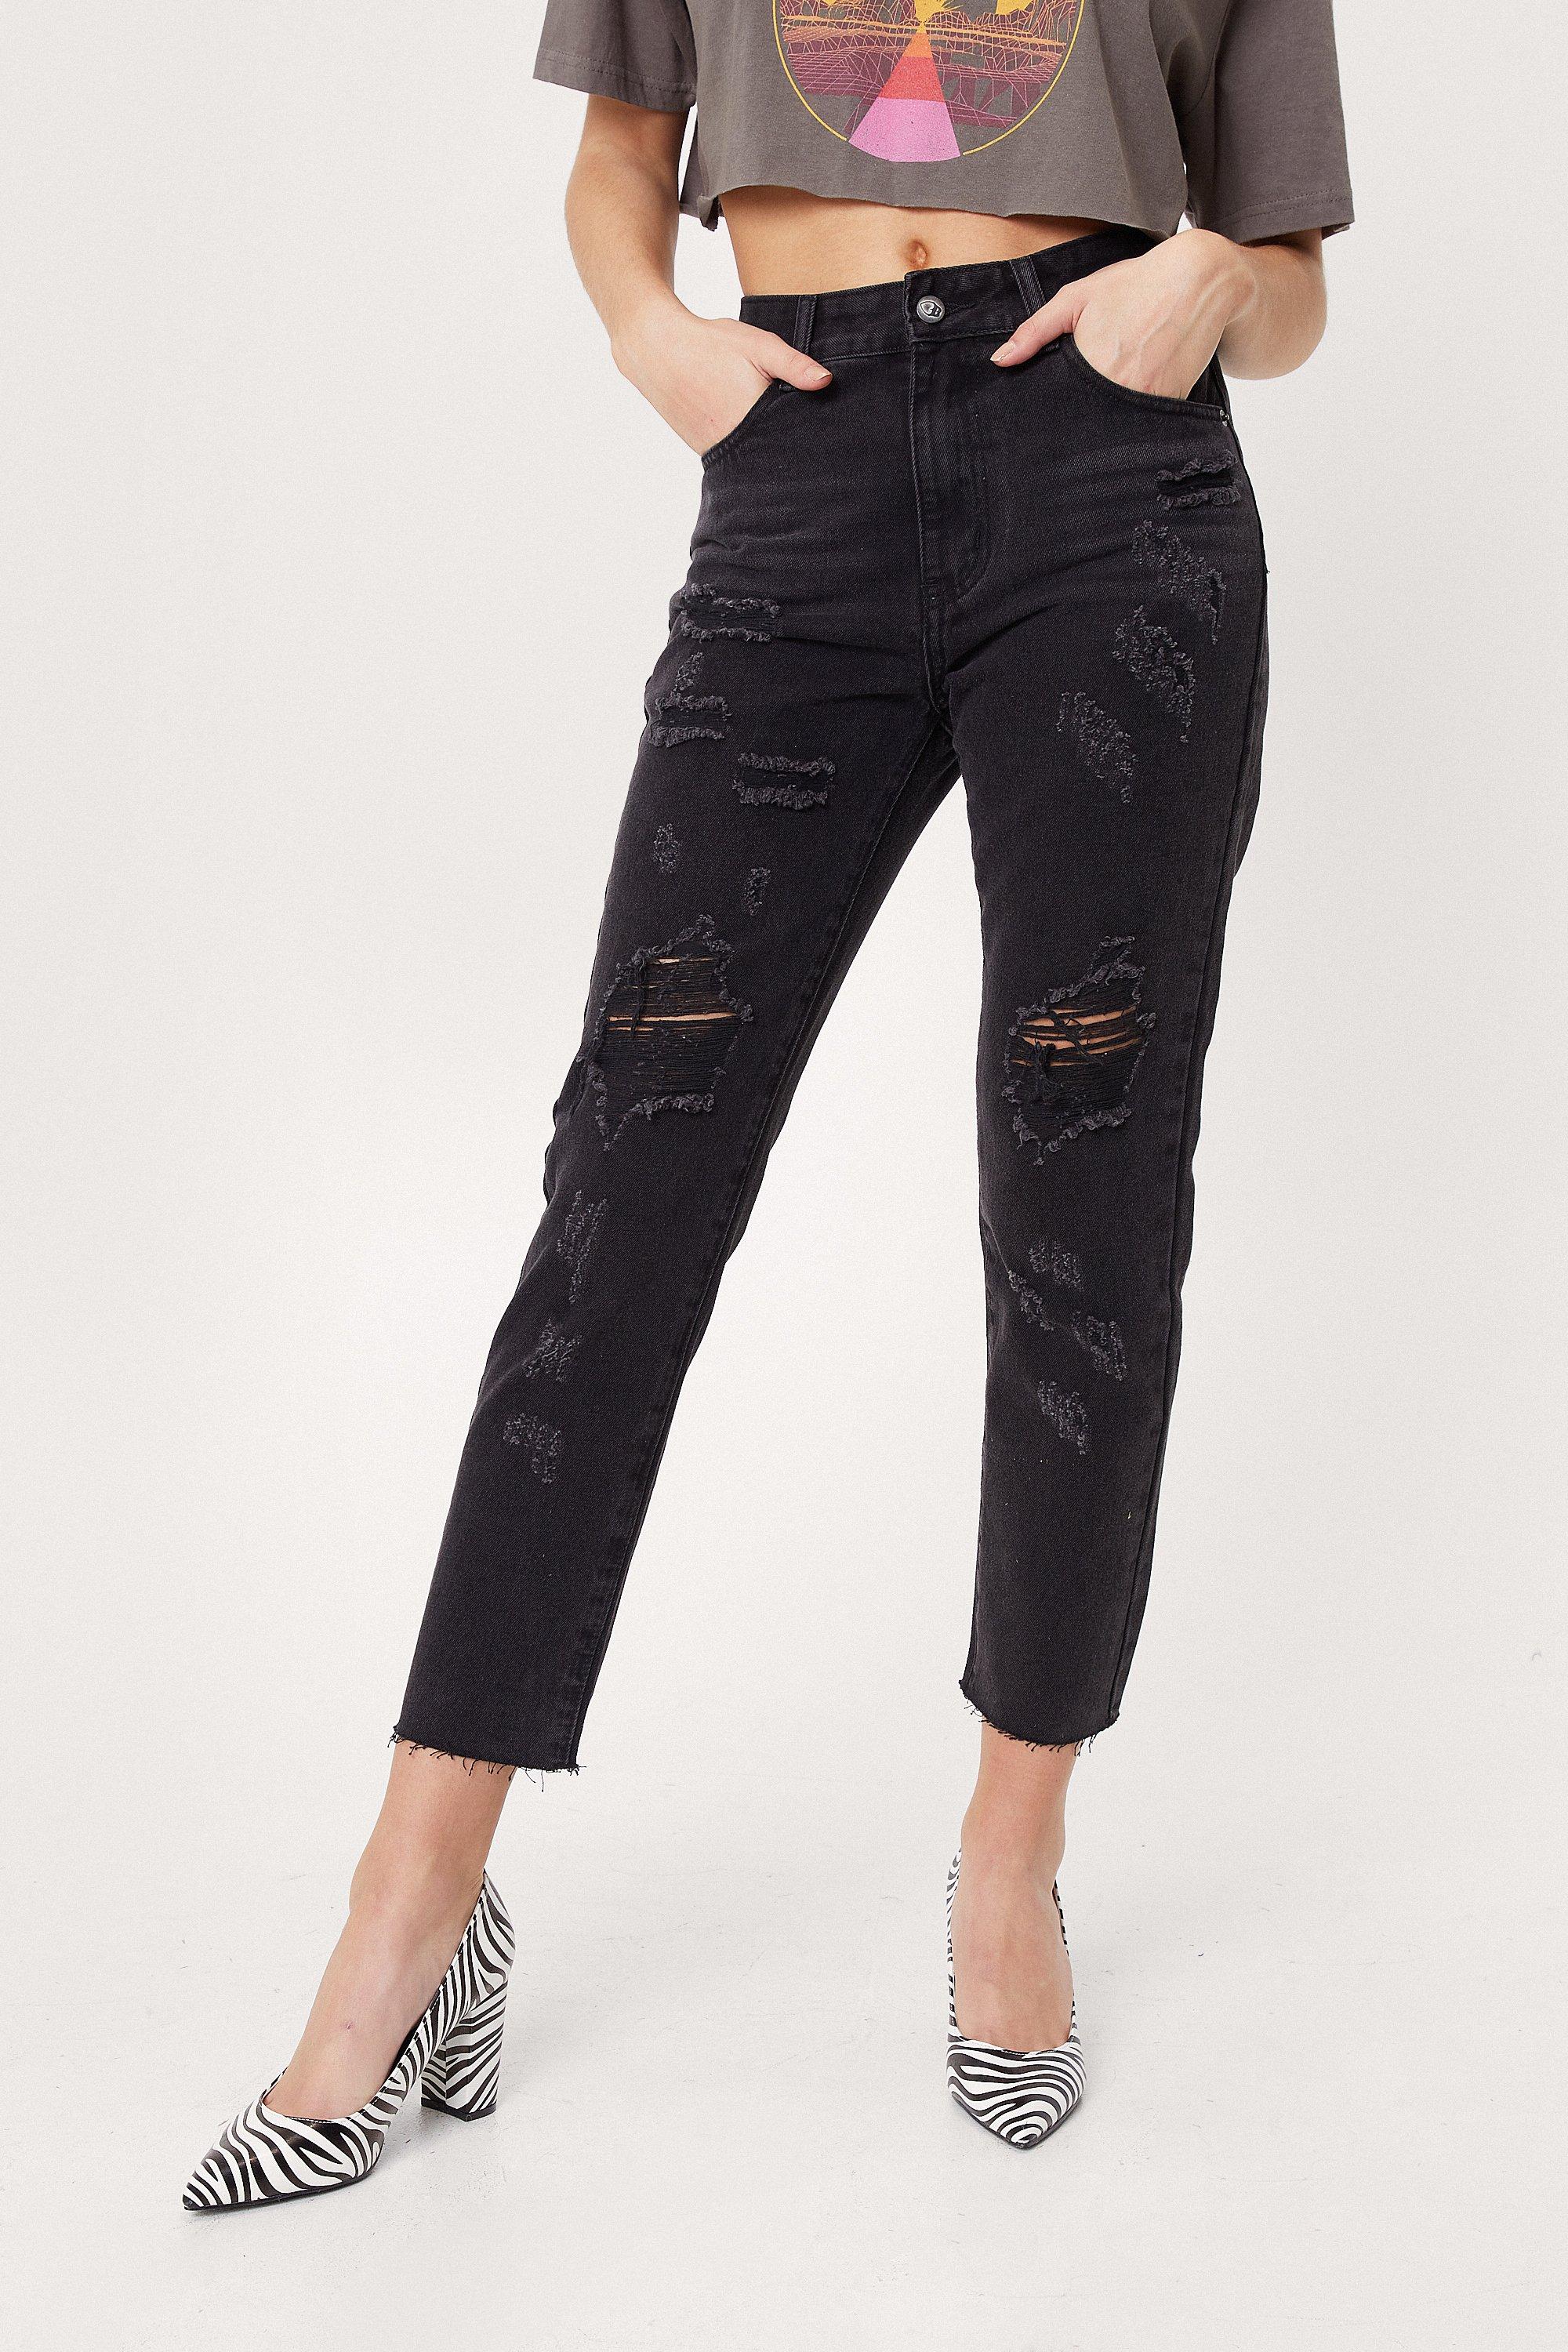 https://media.nastygal.com/i/nastygal/agg60244_black_xl_1/black-high-waisted-distressed-denim-jeans